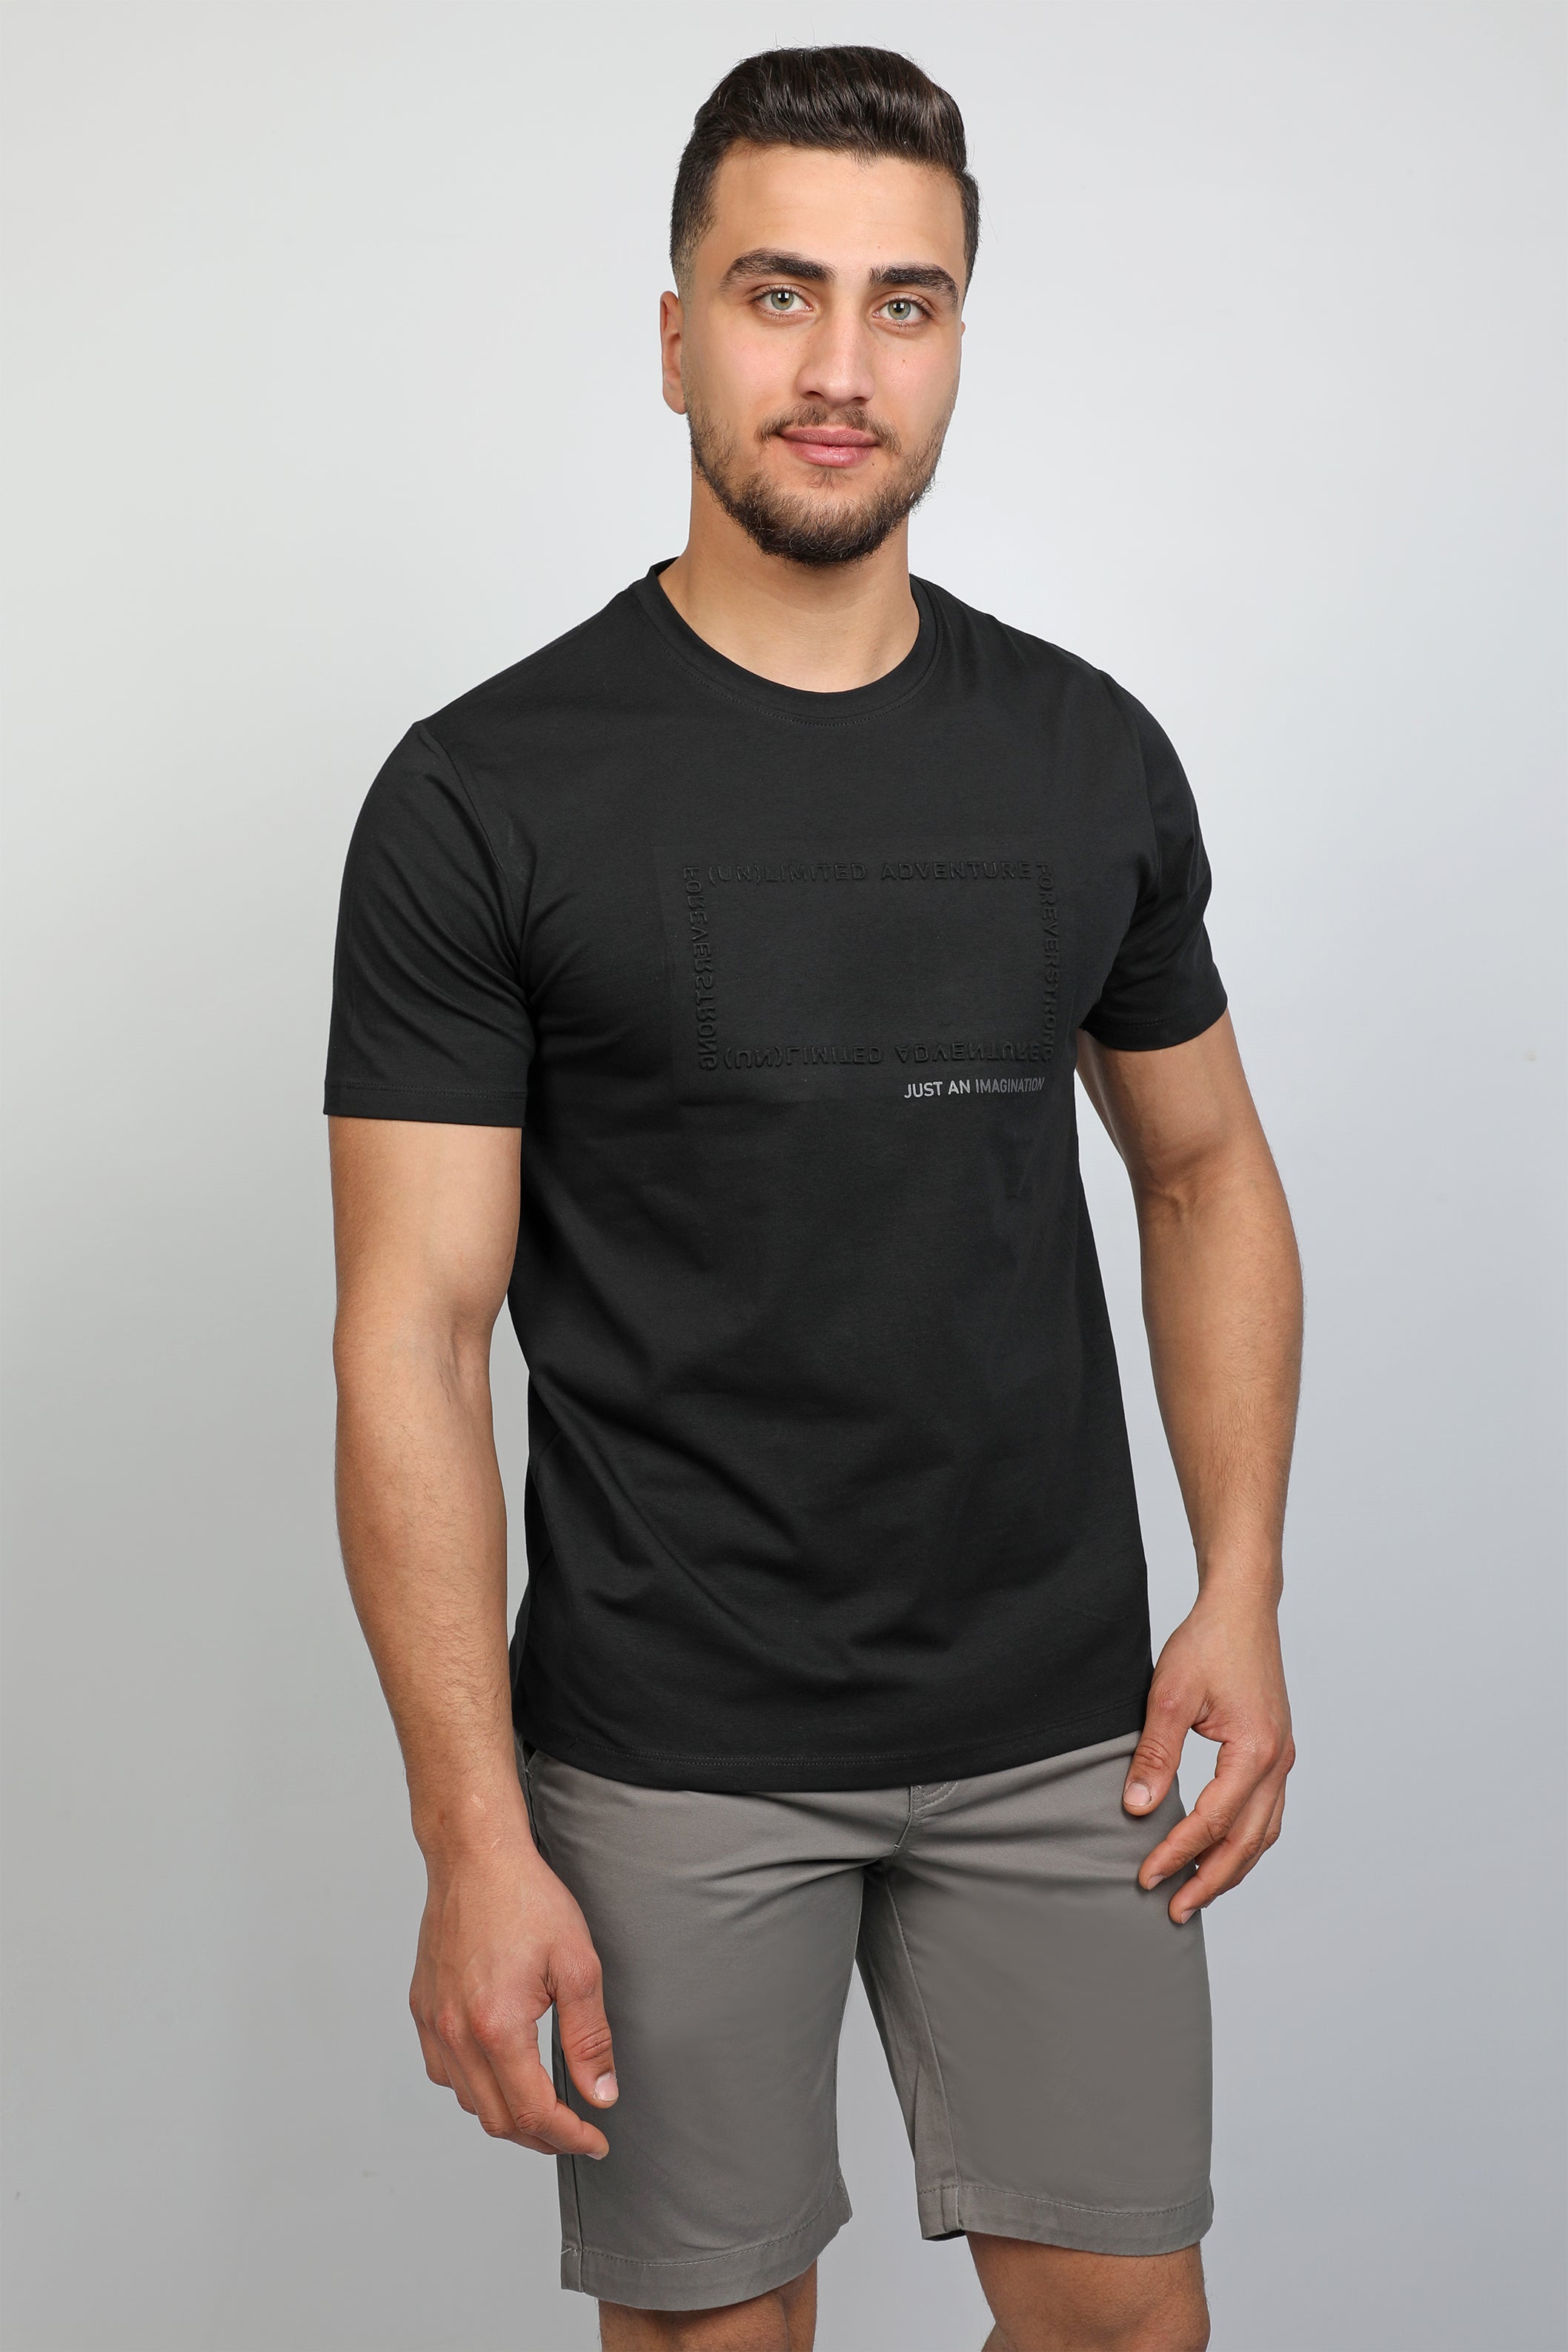 T-shirt Black ' Just An Imagination' Front Design